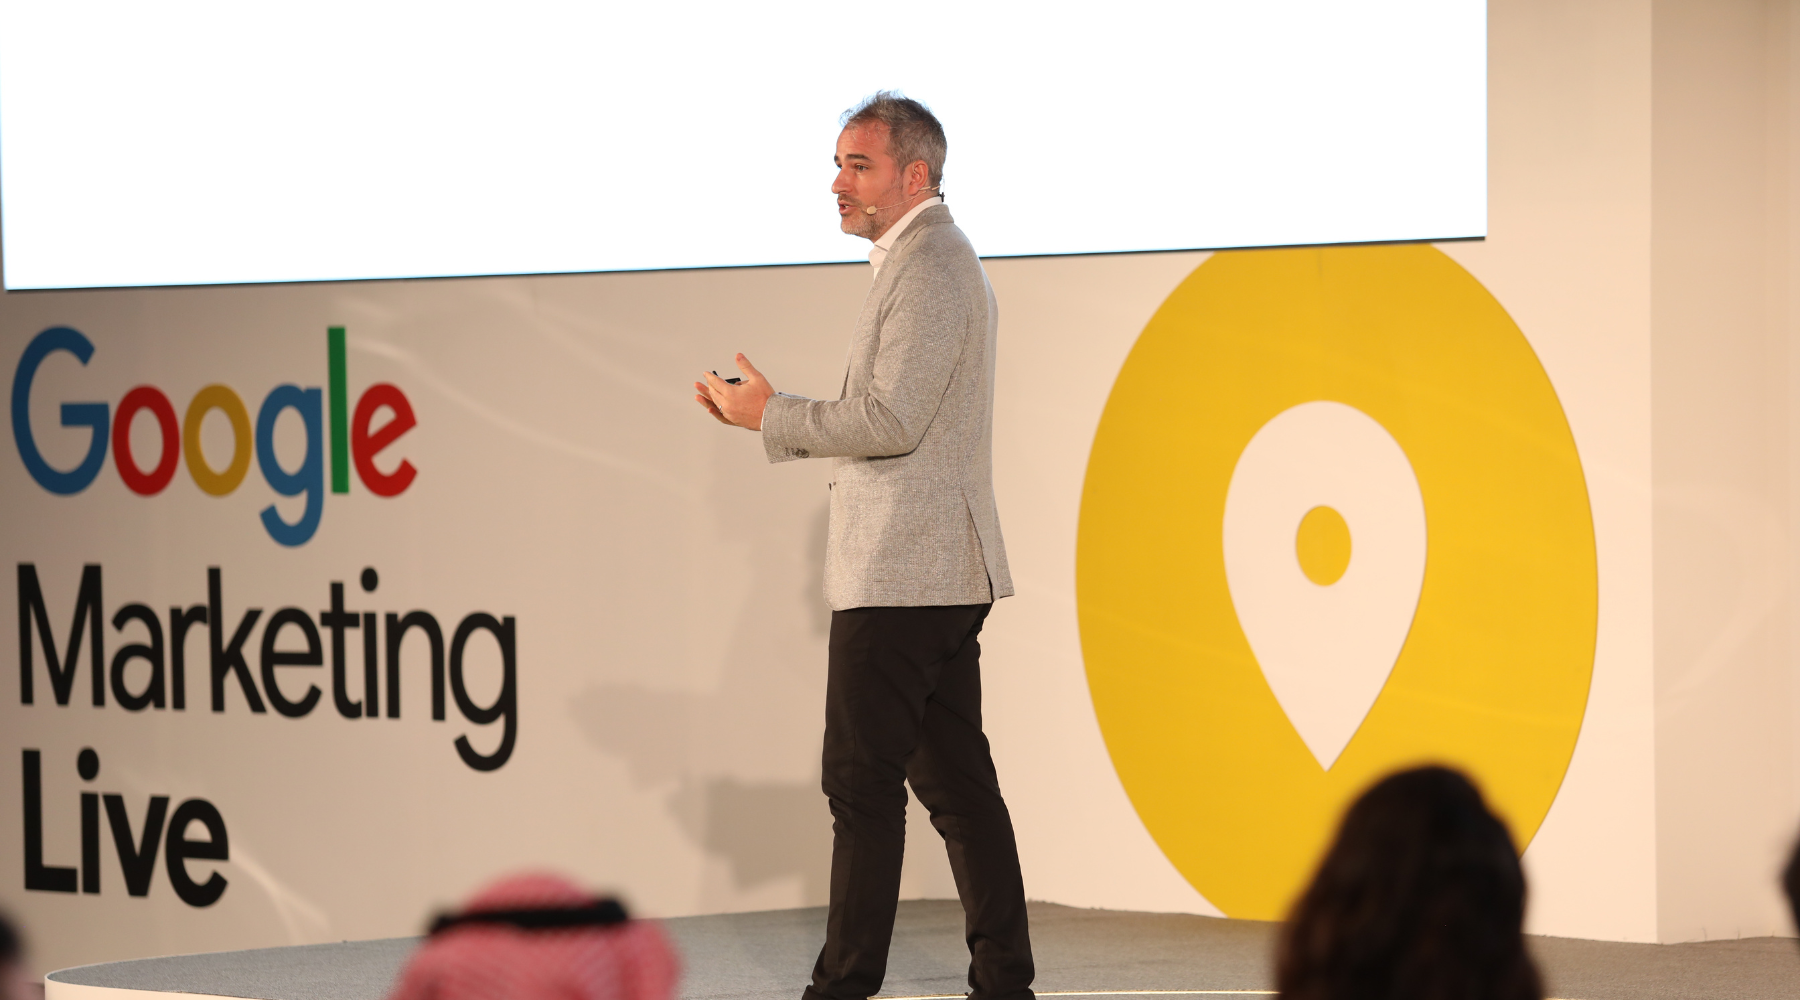 Google Brings its Flagship Event, Google Marketing Live, to KSA